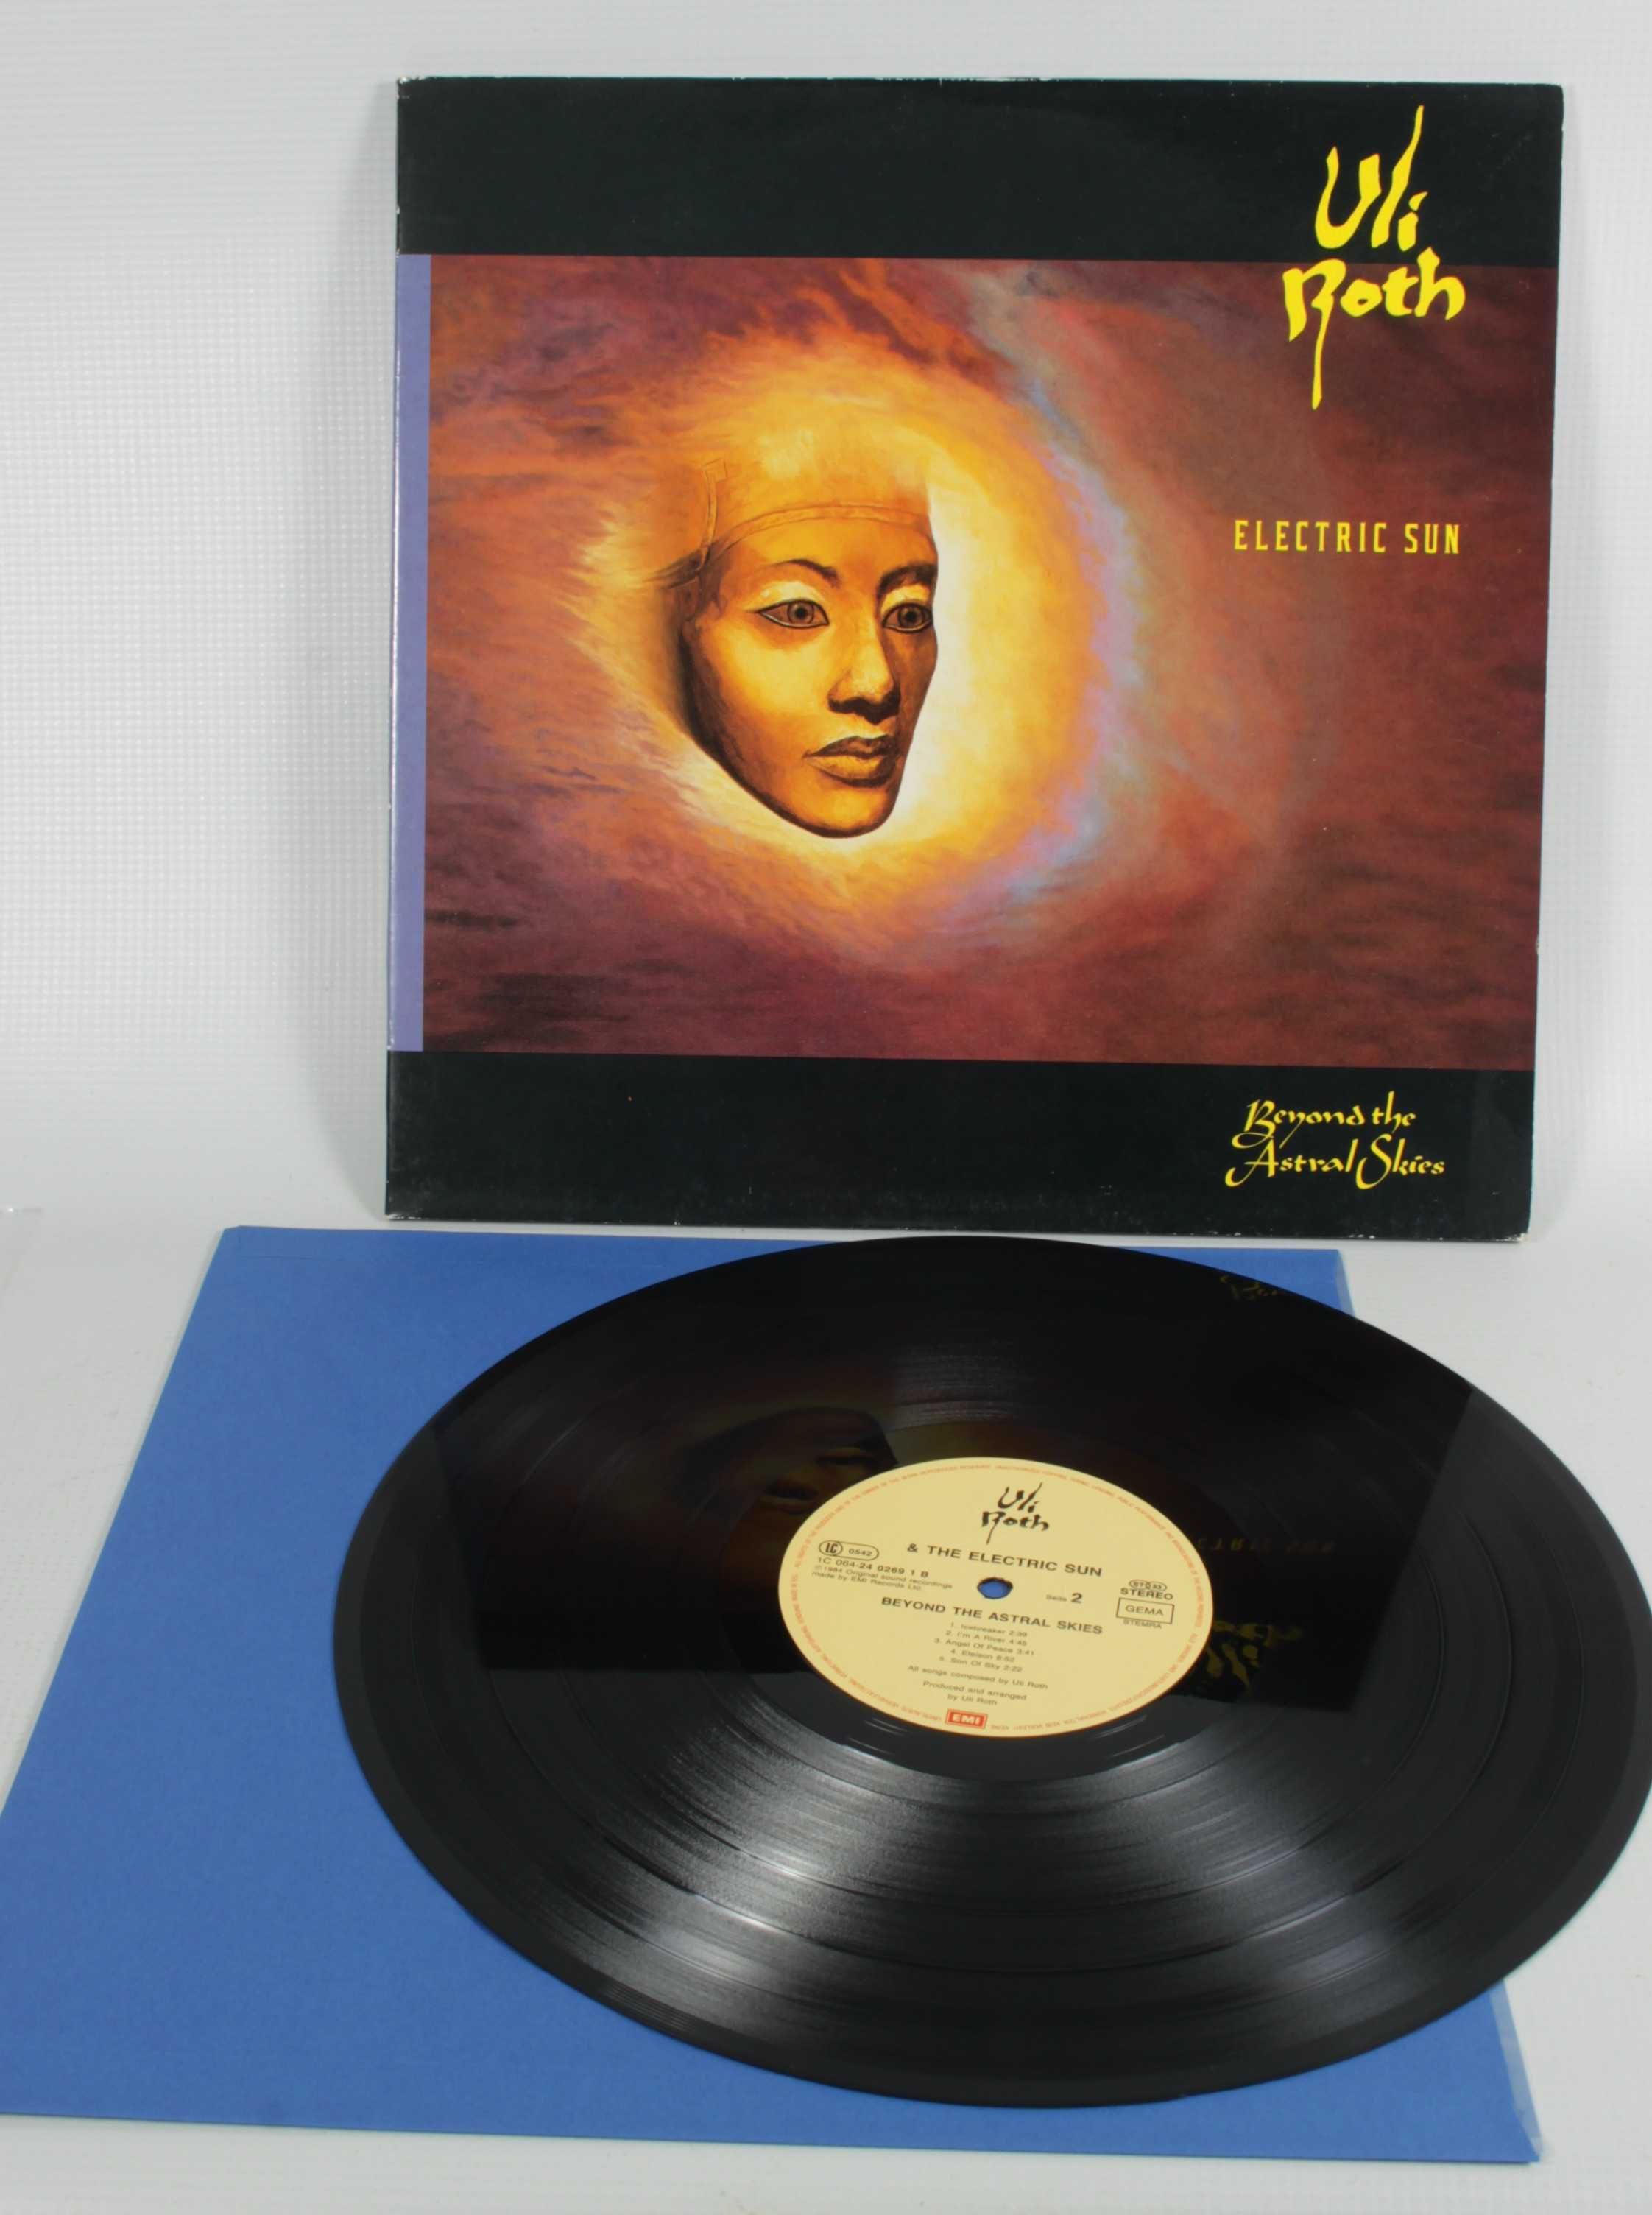 Scorpions ELECTRIC SUN -Uli Jon ROTH Beyond the Astral Skies LP